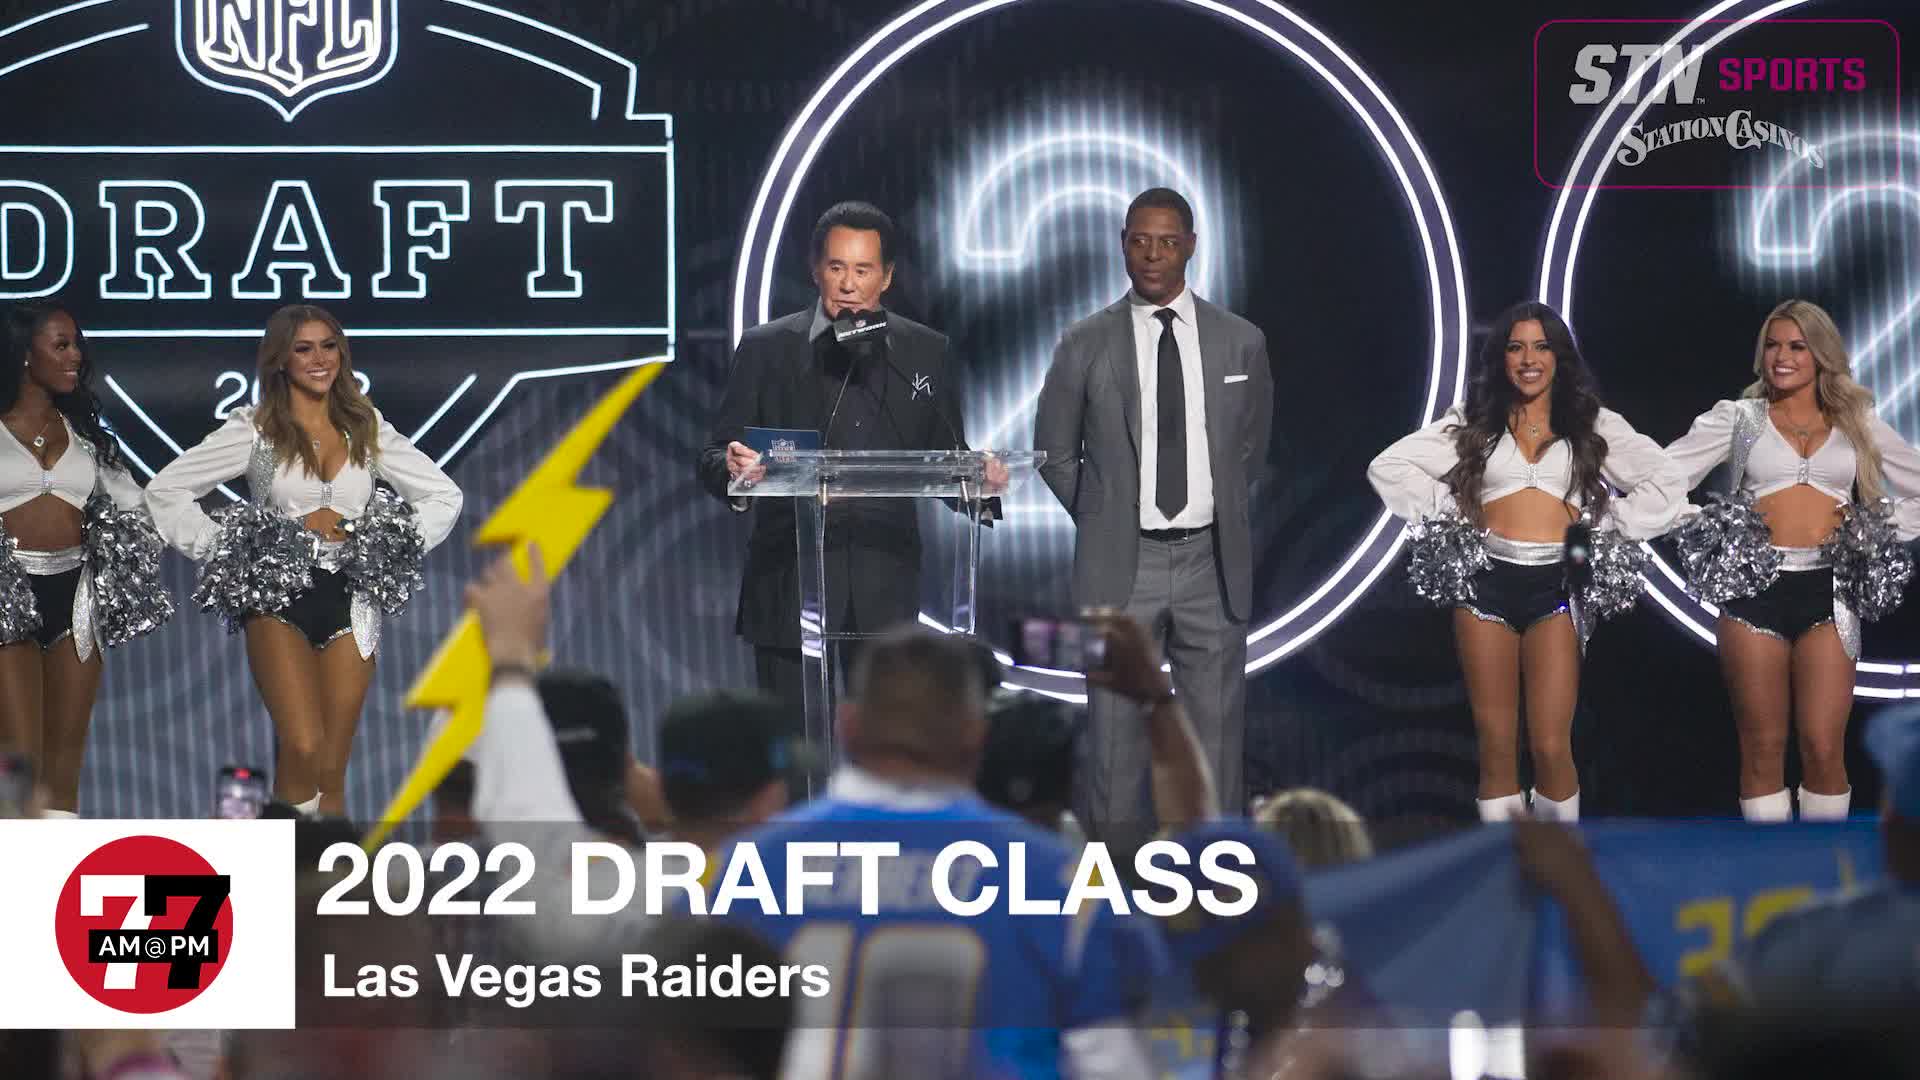 2022 Draft Class for Raiders